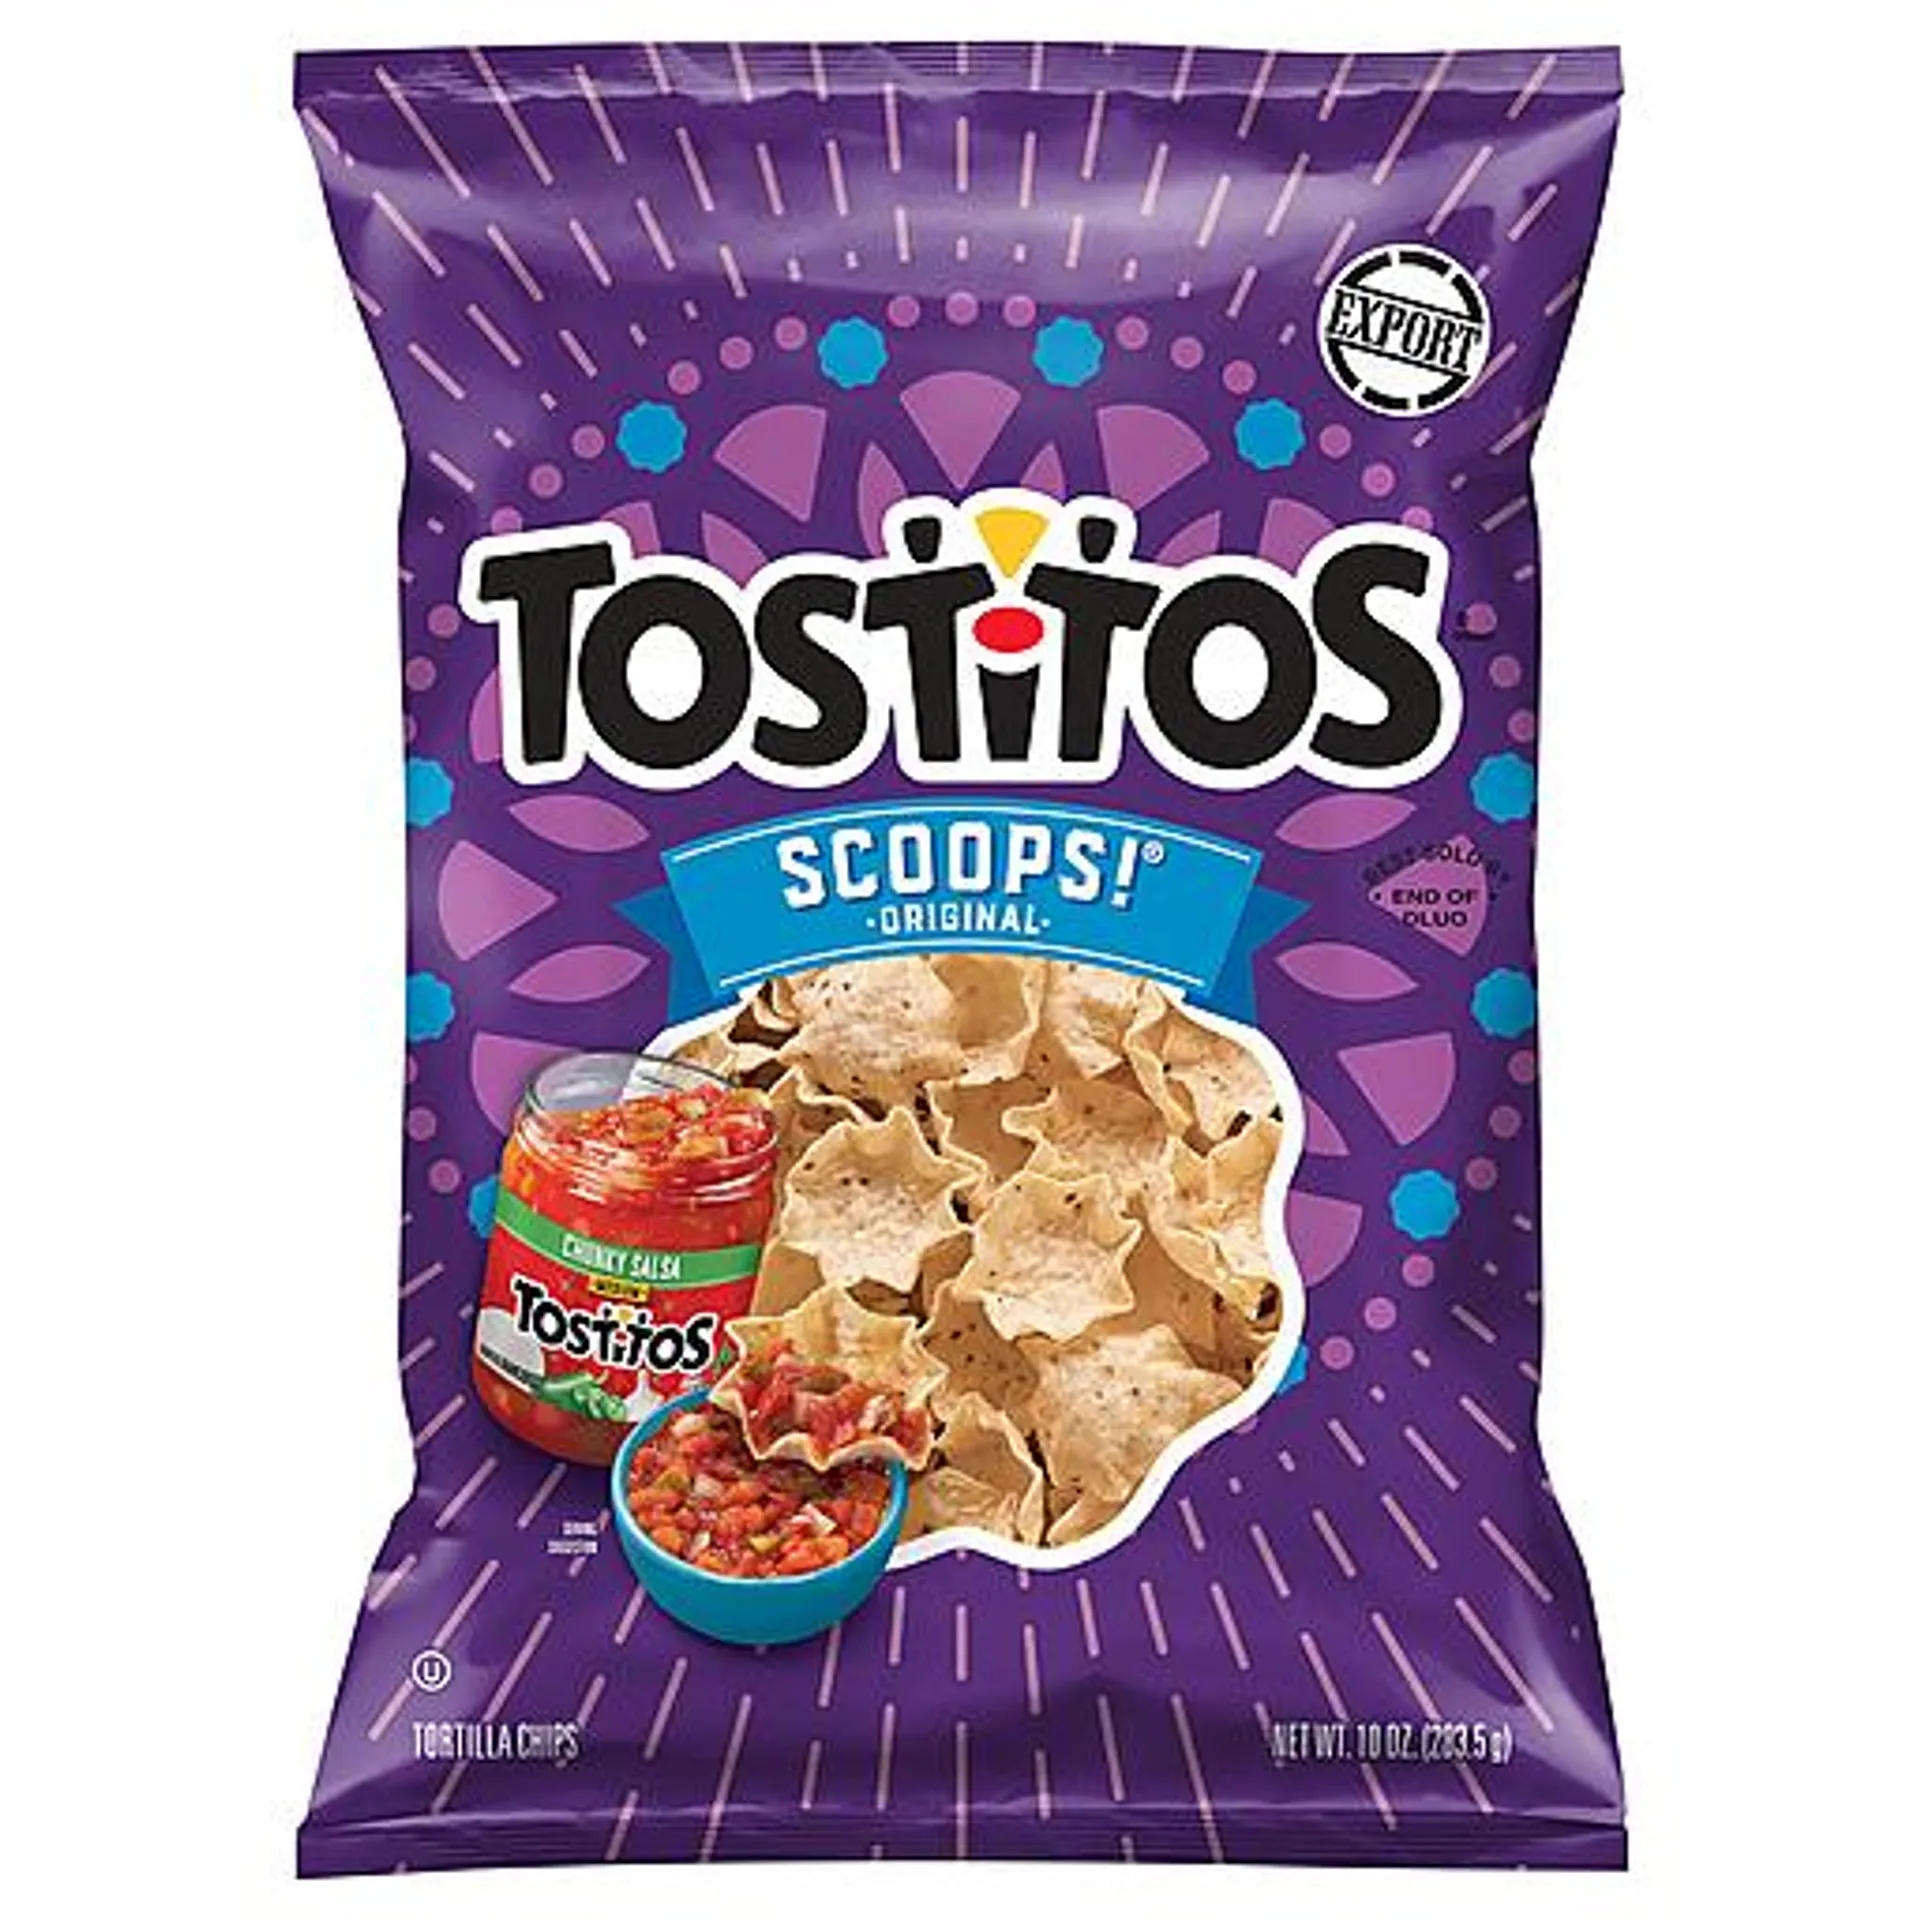 Tostitos Scoops Tortilla Chips bag